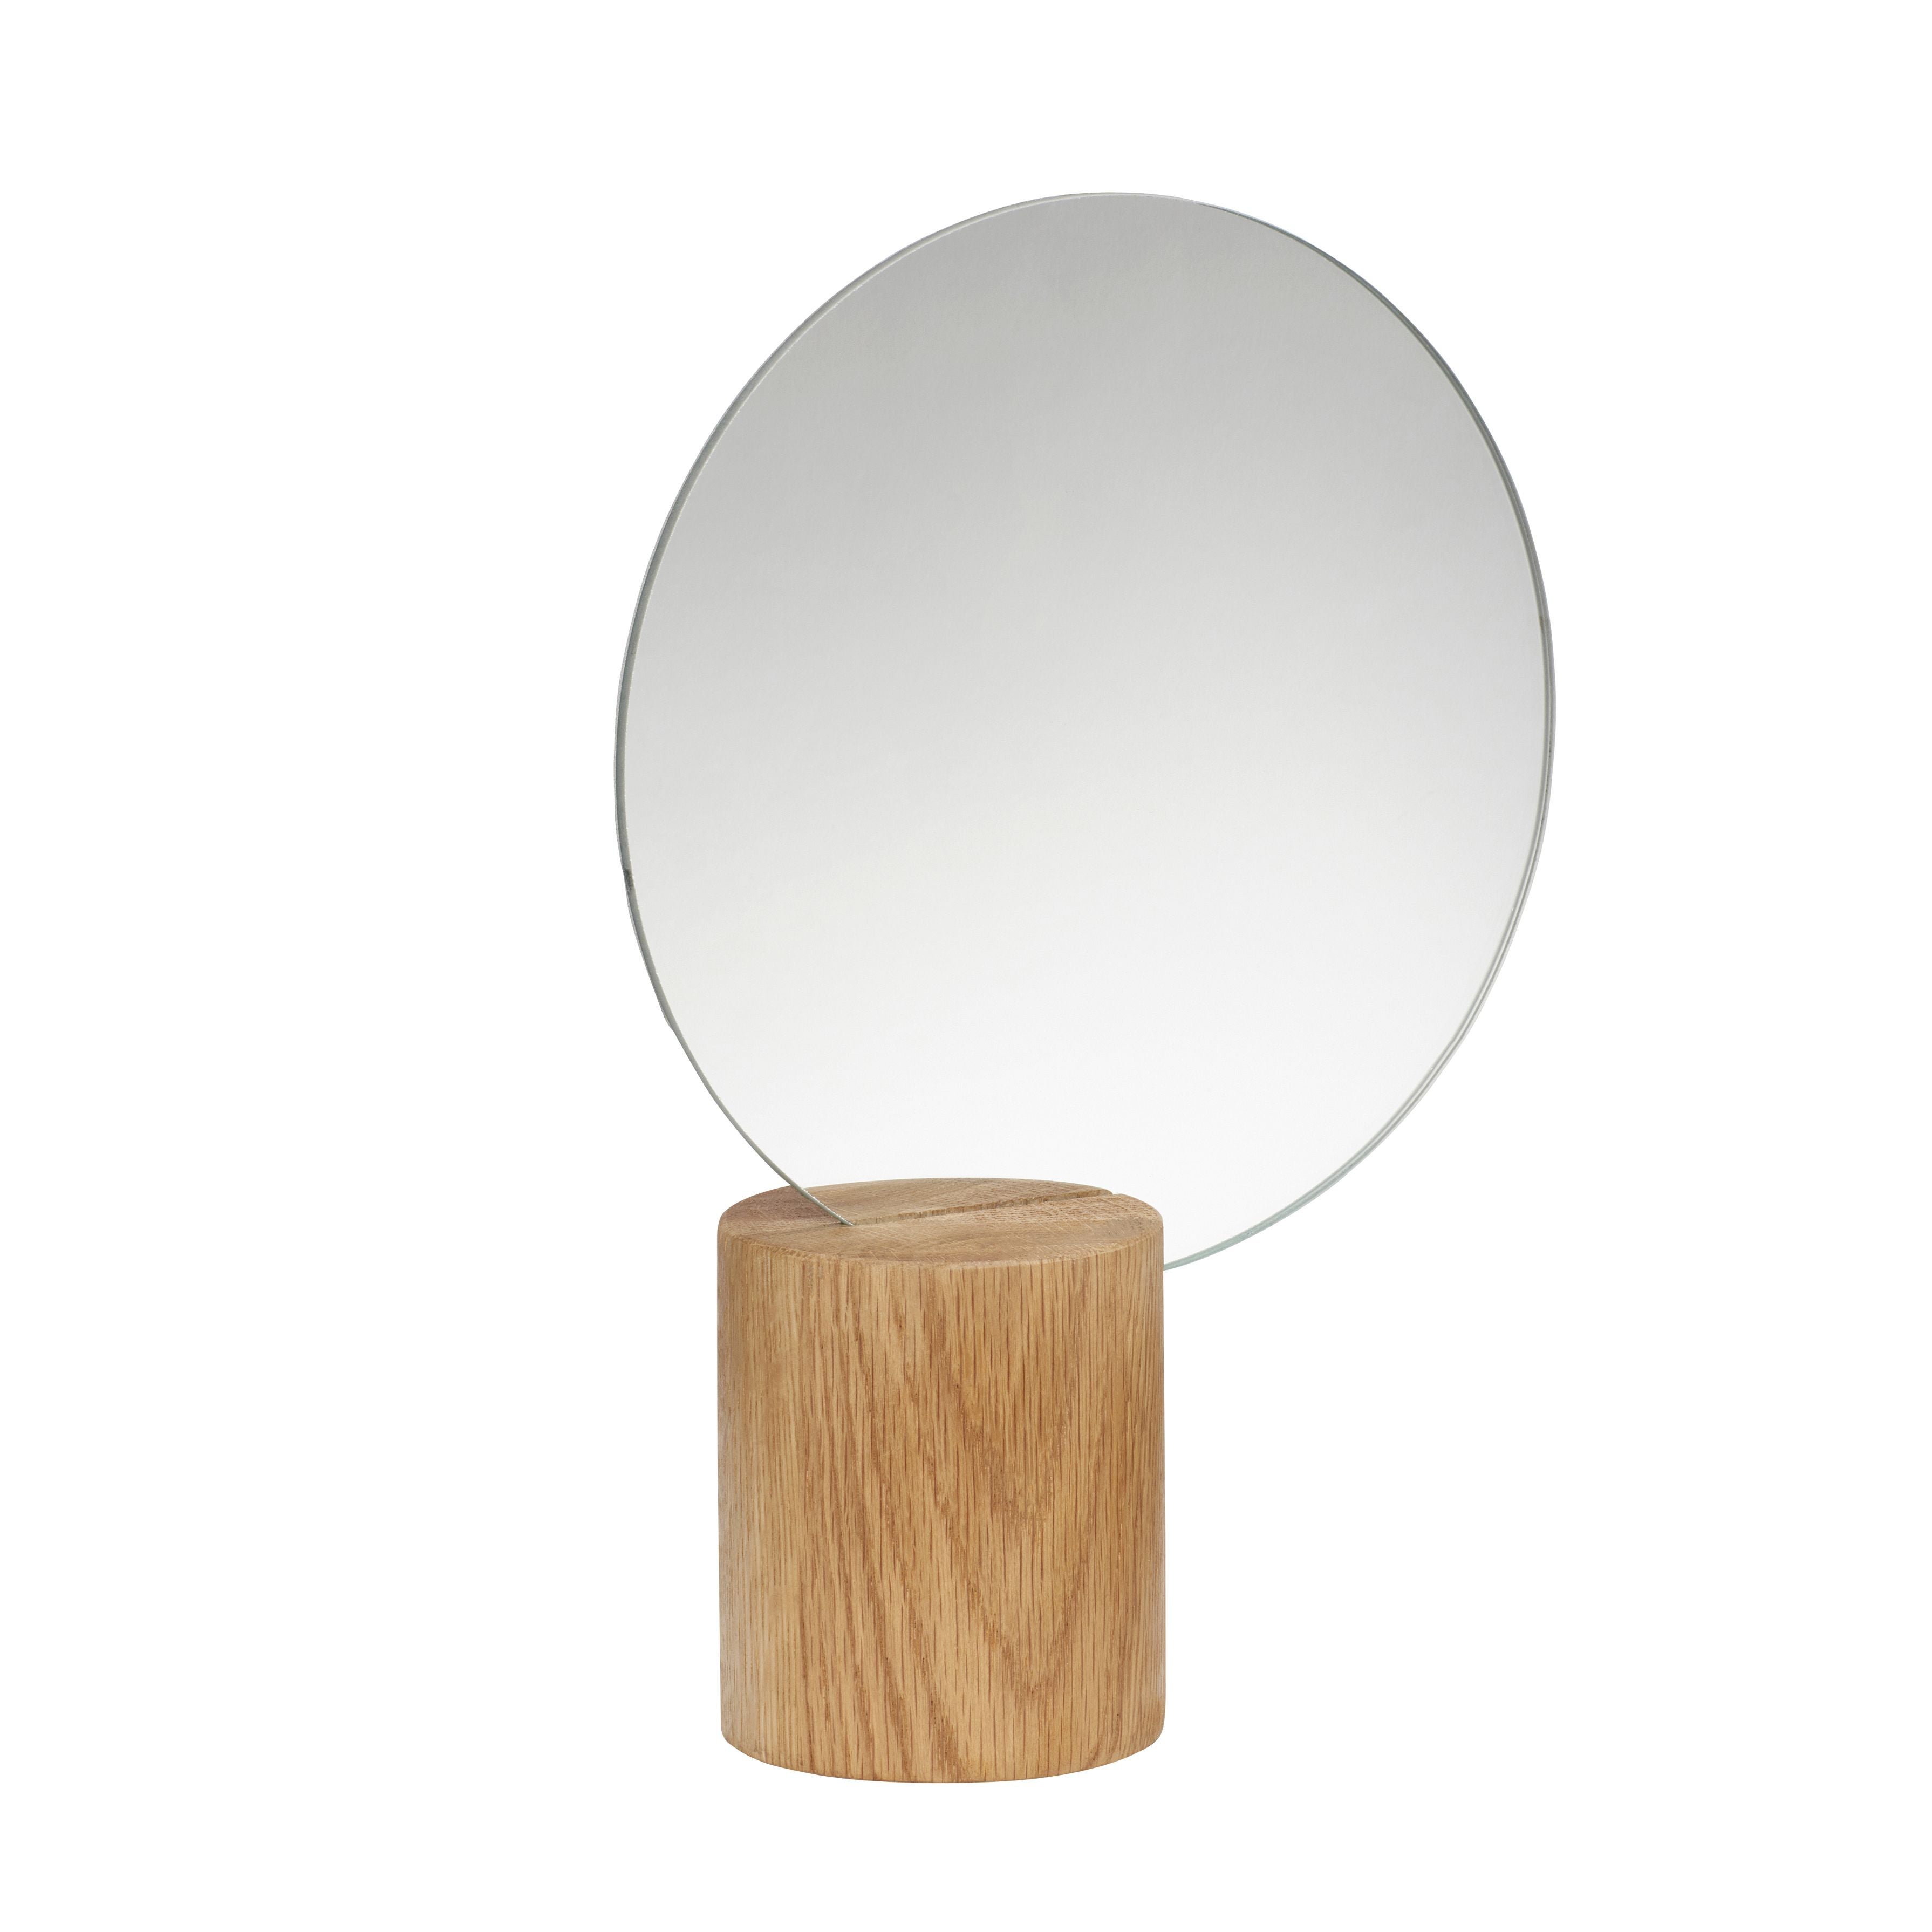 Hübsch borde de la mesa espejo de madera redonda natural